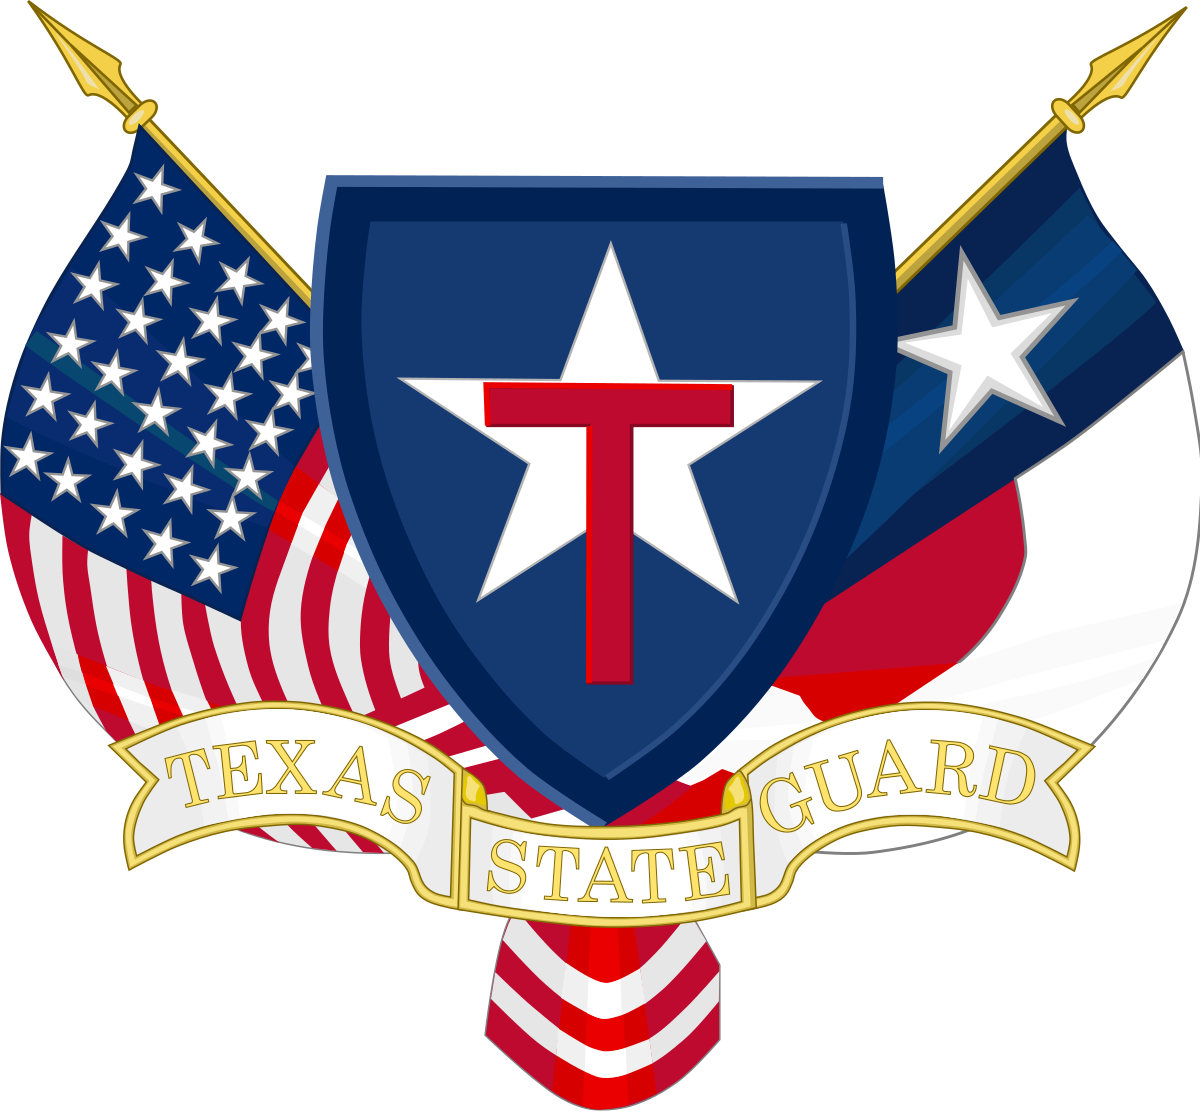 Texas State Guard Logo (2000x1854)